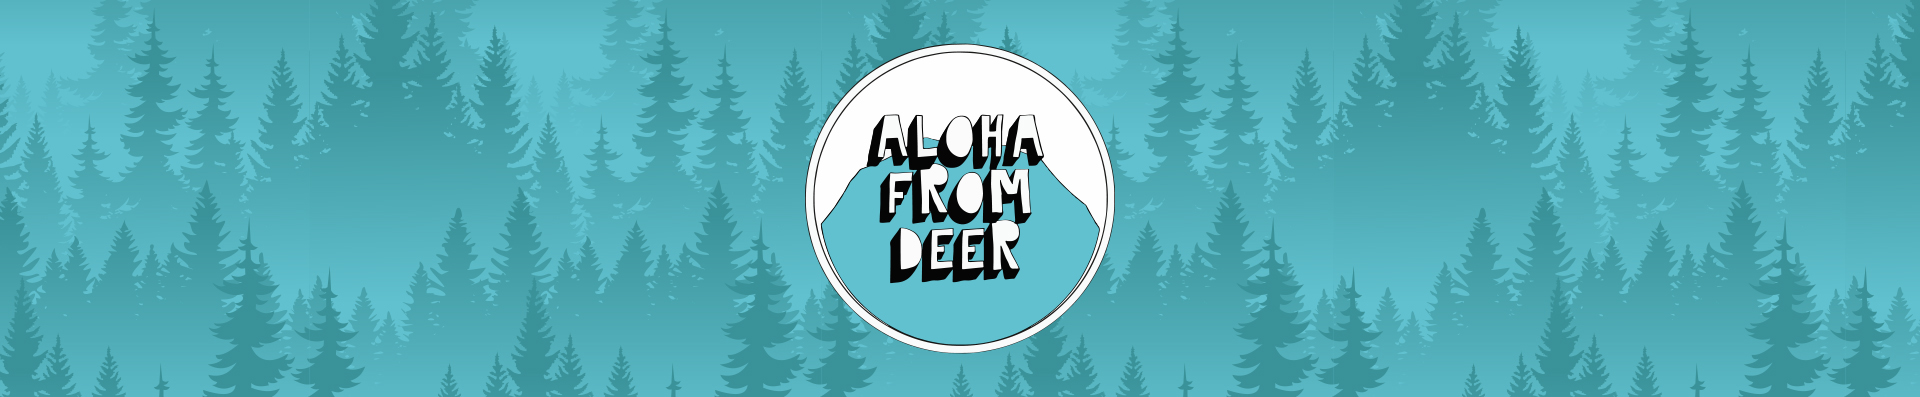 logo aloha from deer